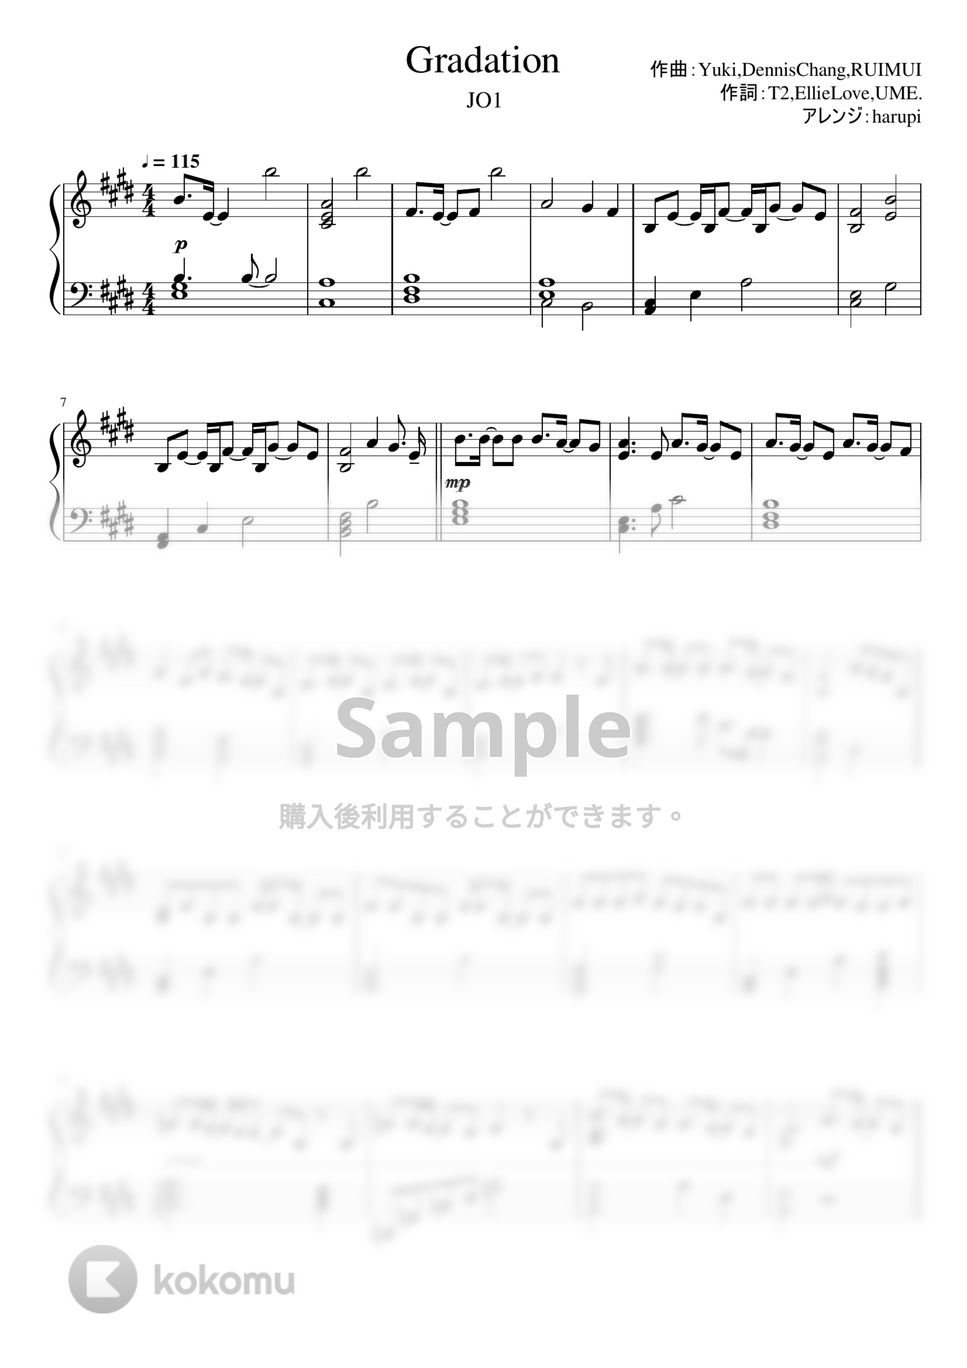 JO1 - Gradation (ピアノソロ,映画) by harupi